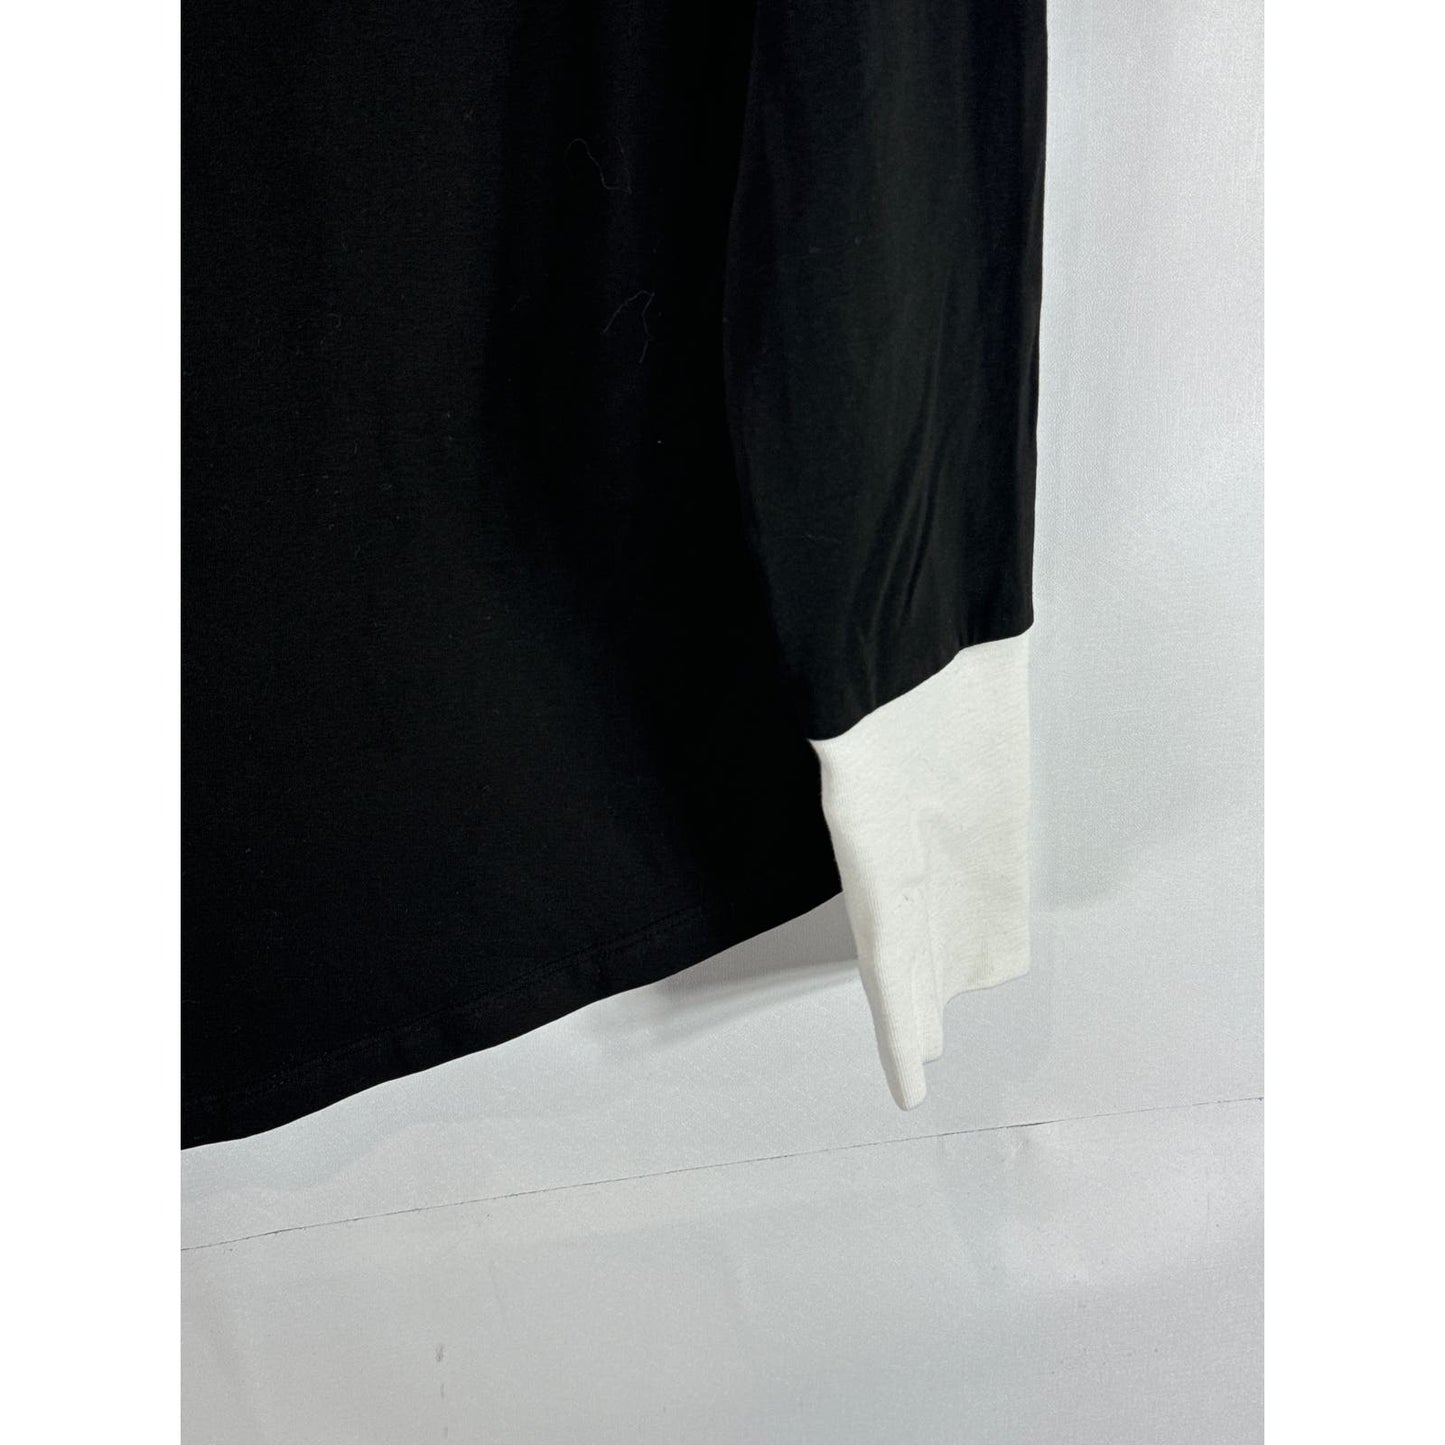 UNIVERSAL STANDARD Women's Black/White Rhine Color --Sleeve Cuff Top SZ XS(US-L)